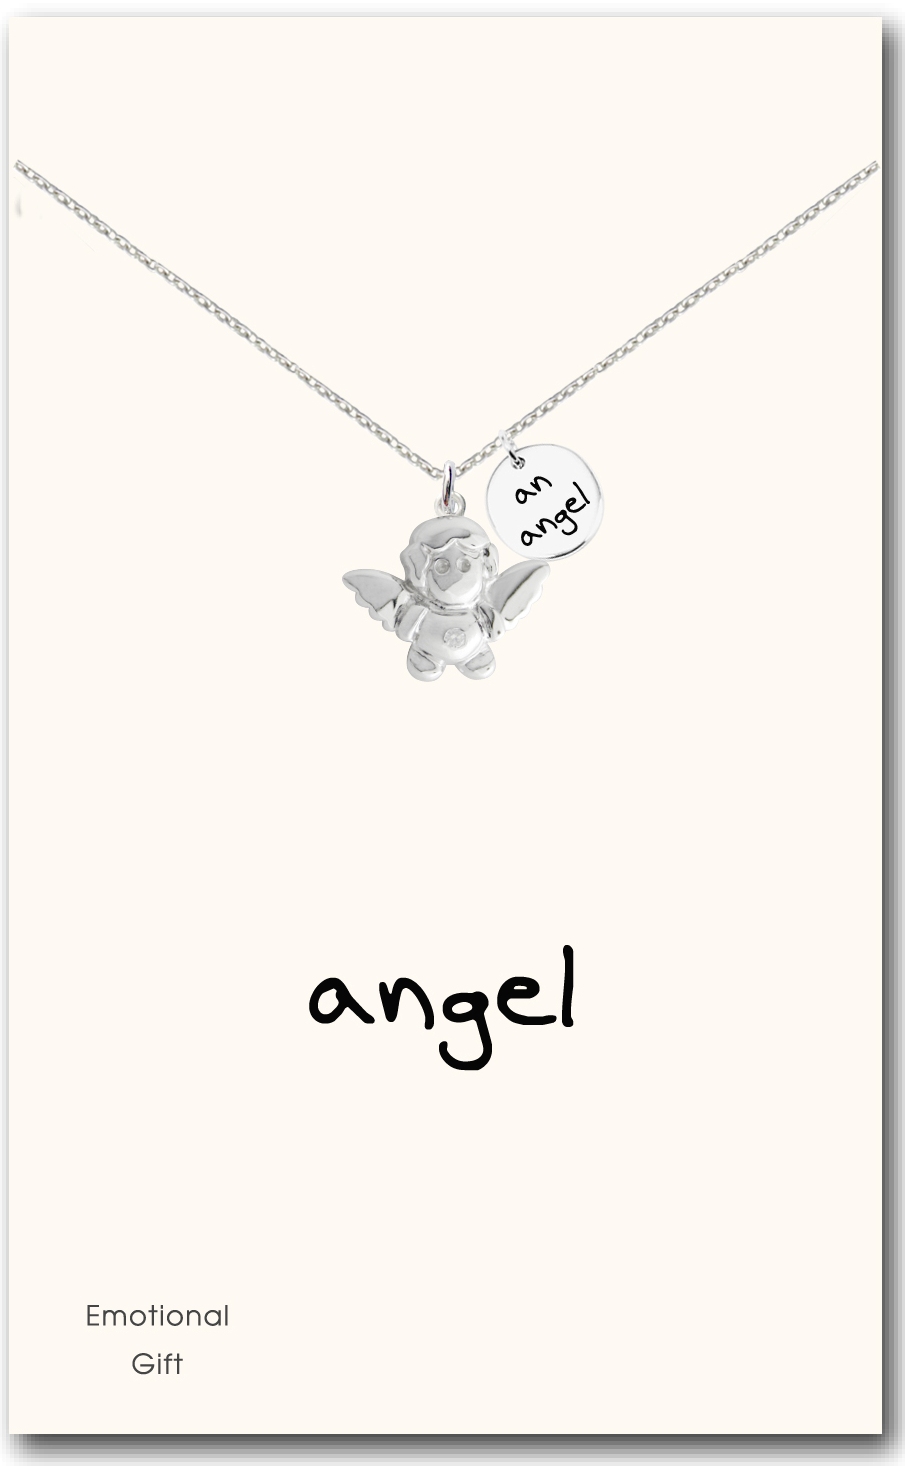 Angel pendant necklace